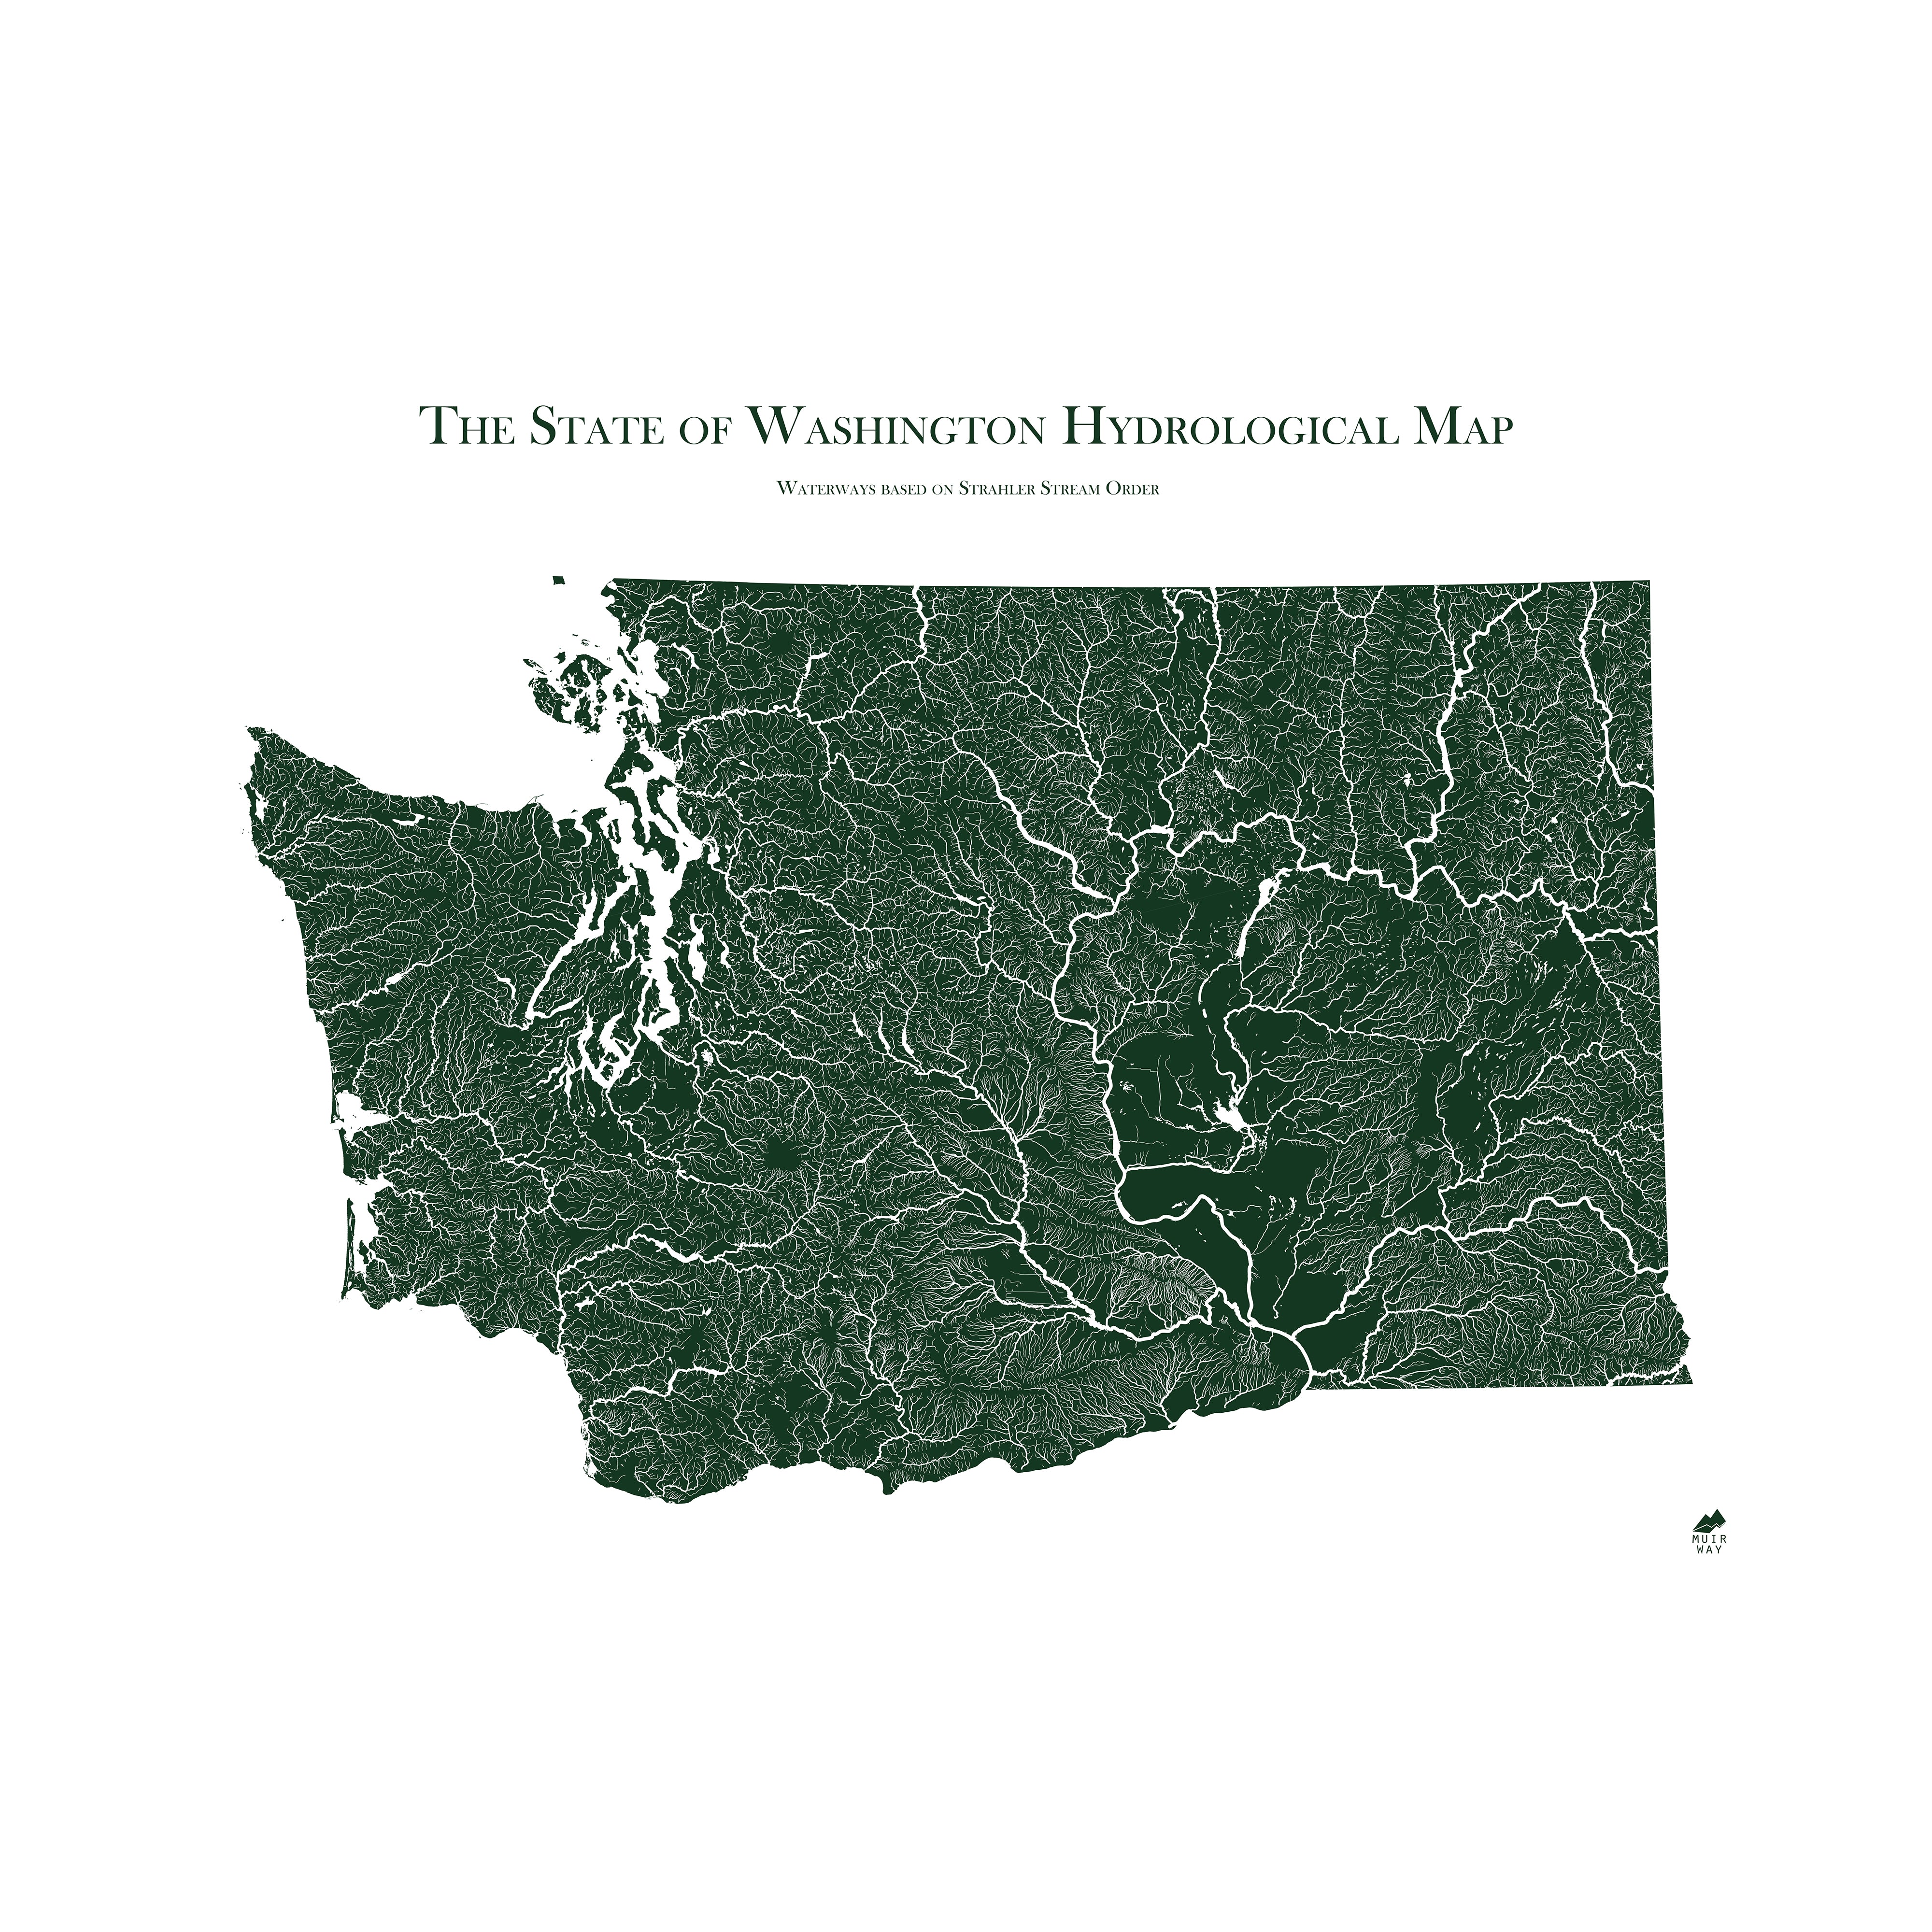 Washington Rivers Map